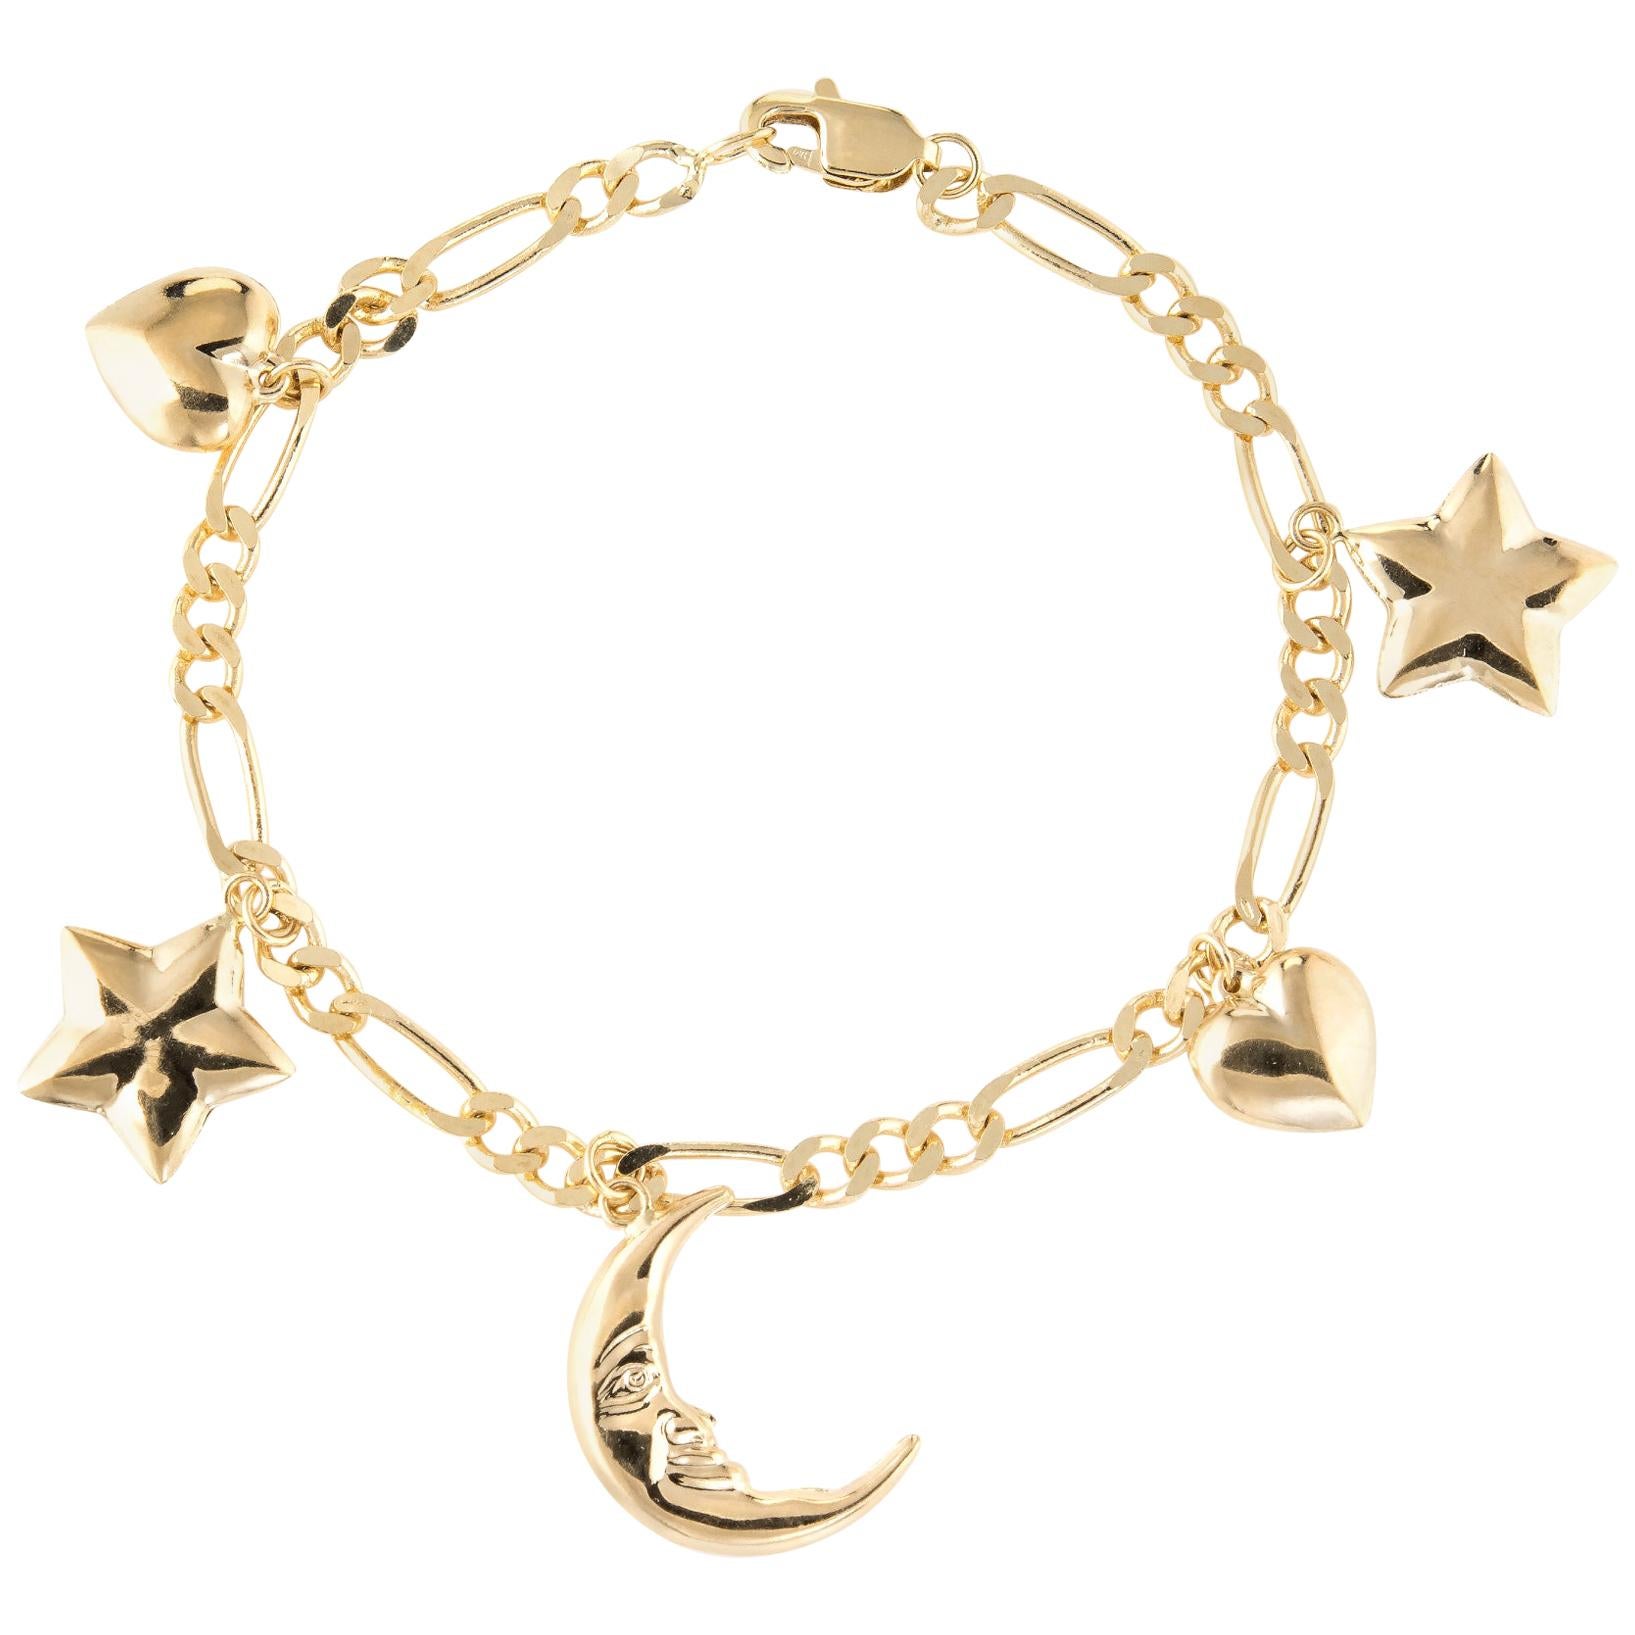 Vintage Charm Bracelet Crescent Moon Star Heart 14 Karat Gold Estate Jewelry